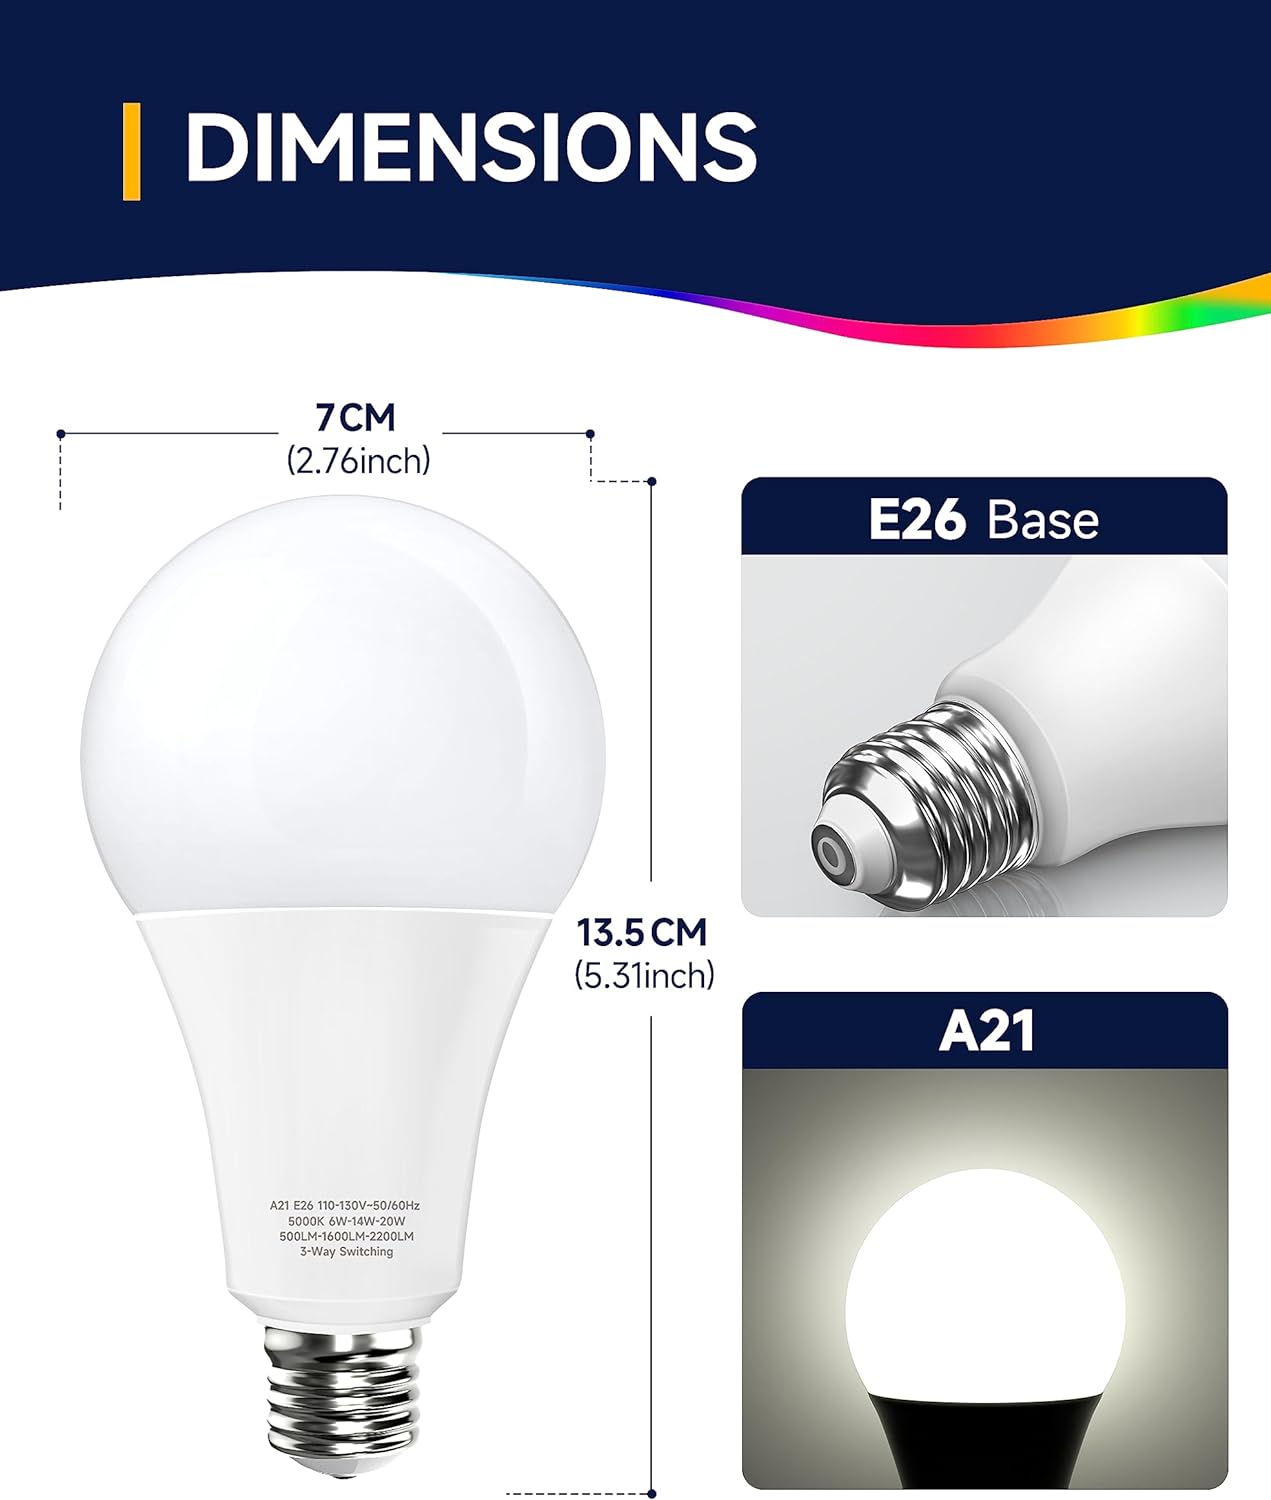 UNILAMP A21 3 Way LED Light Bulbs Review